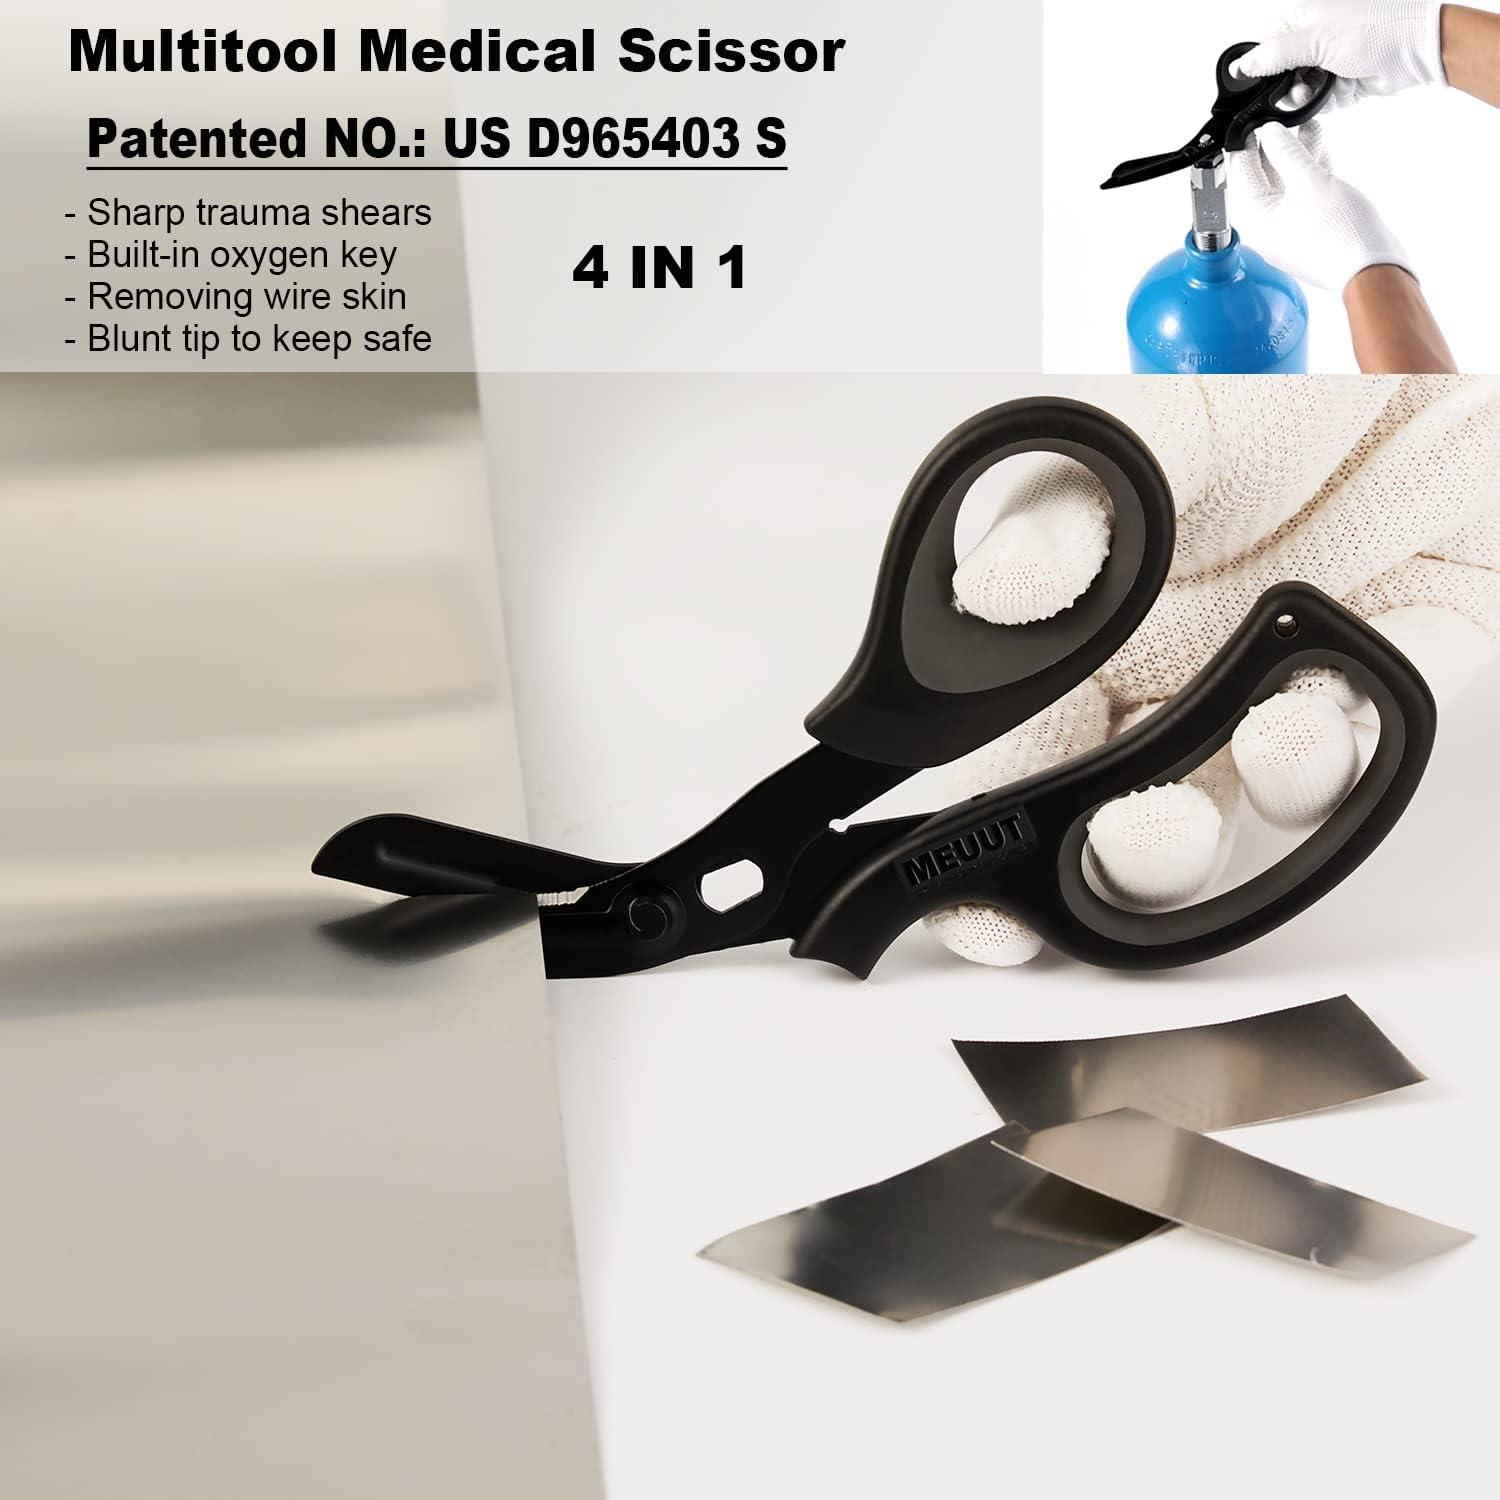 MDpocket 6 Nurse Bandage and Utility Scissors - Black